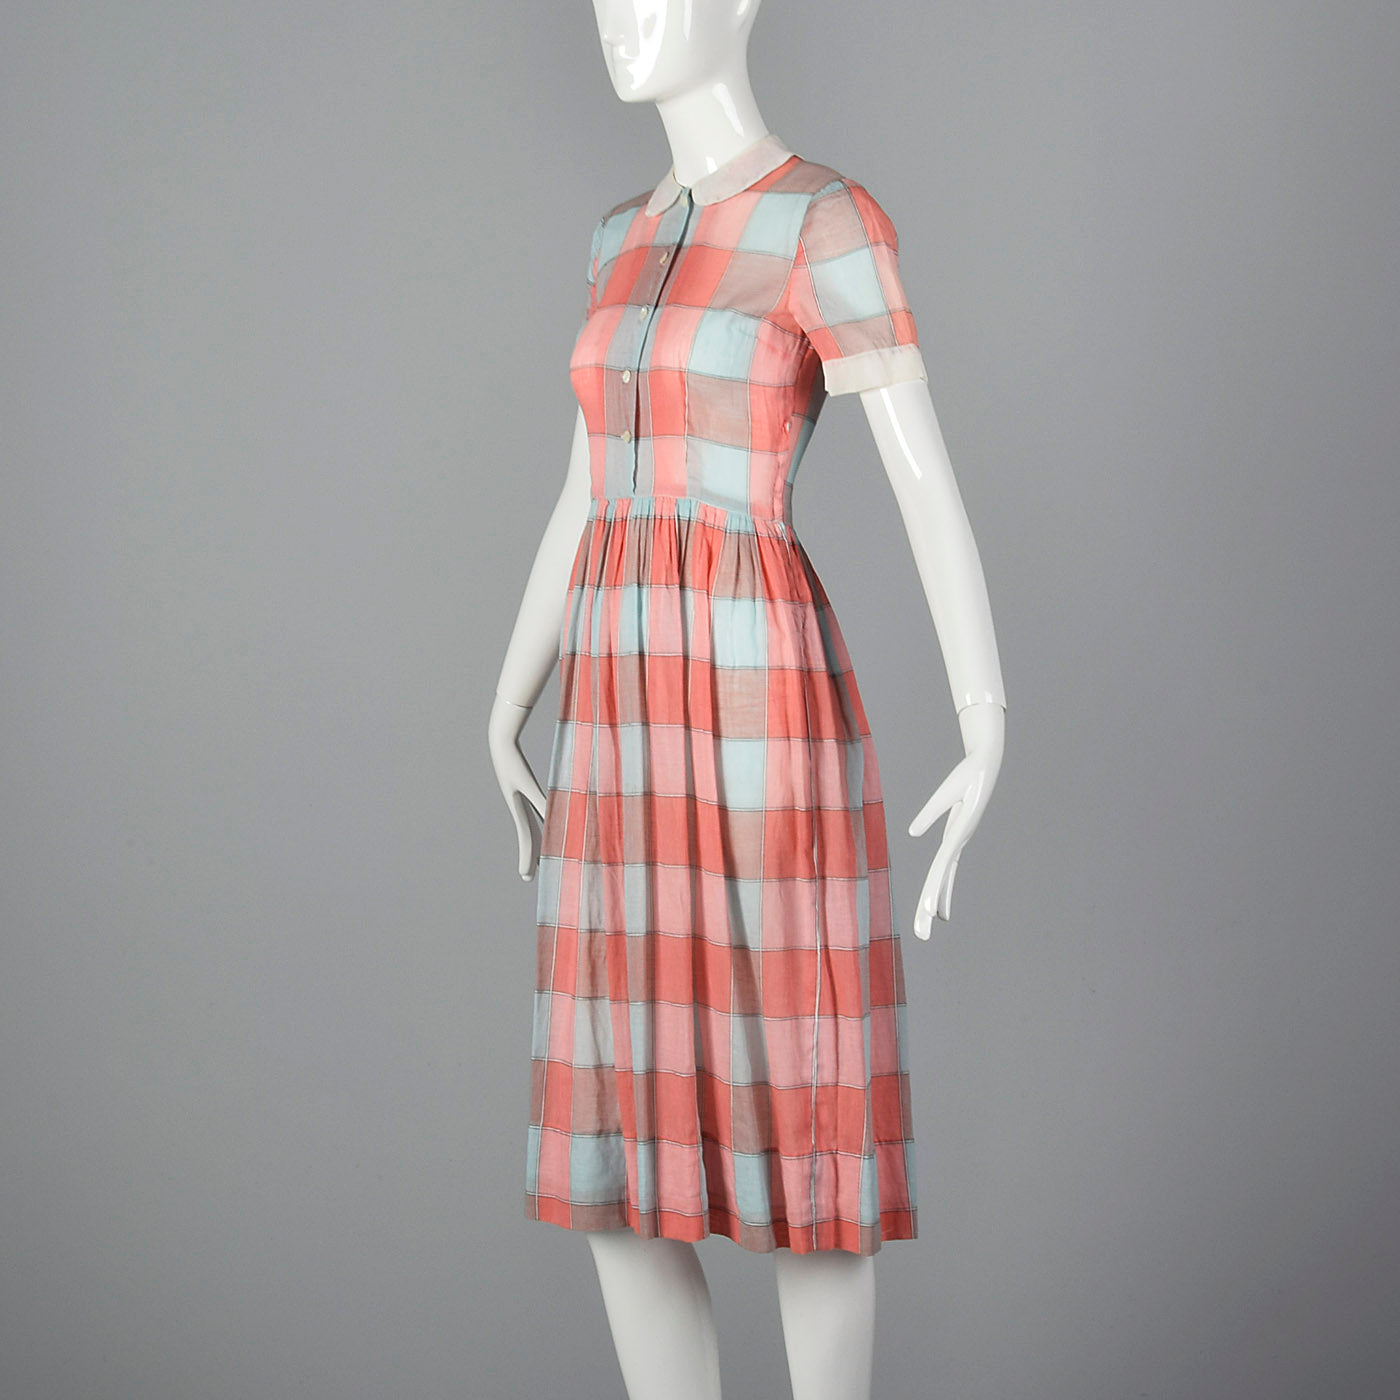 1950s Plaid Day Dress with Peter Pan Collar